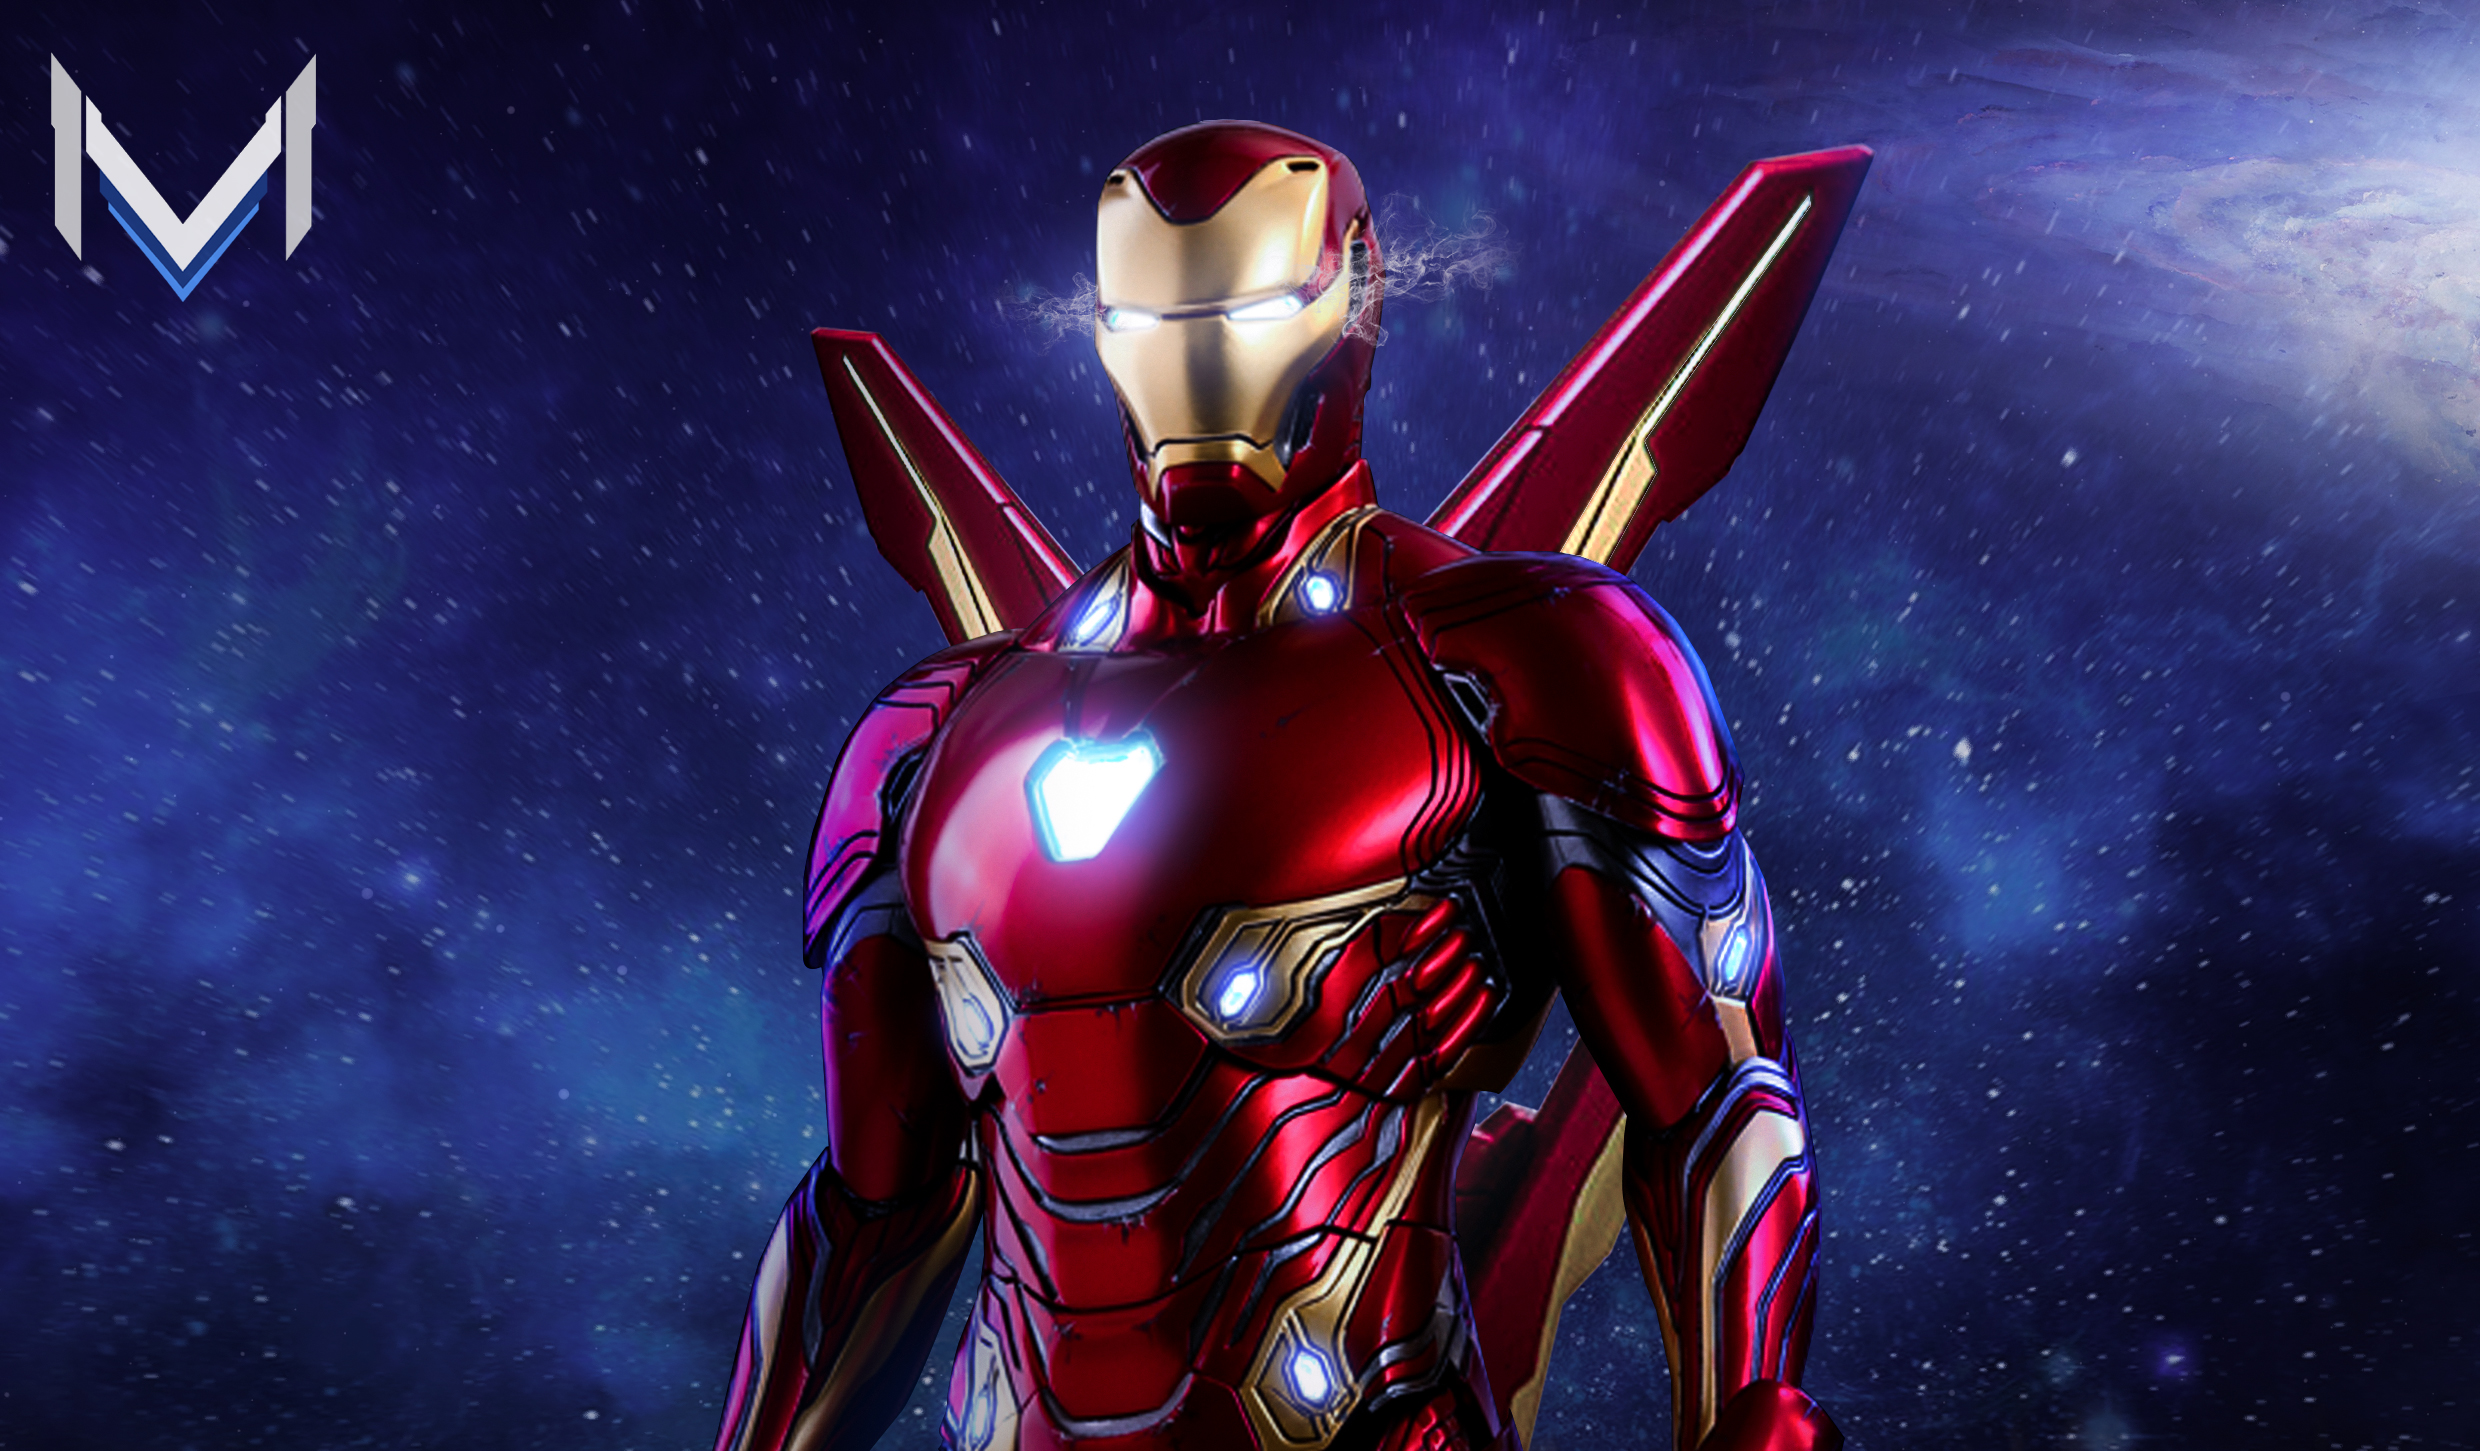 Iron Man Avengers Tony Stark Superhero Armor 2480x1451